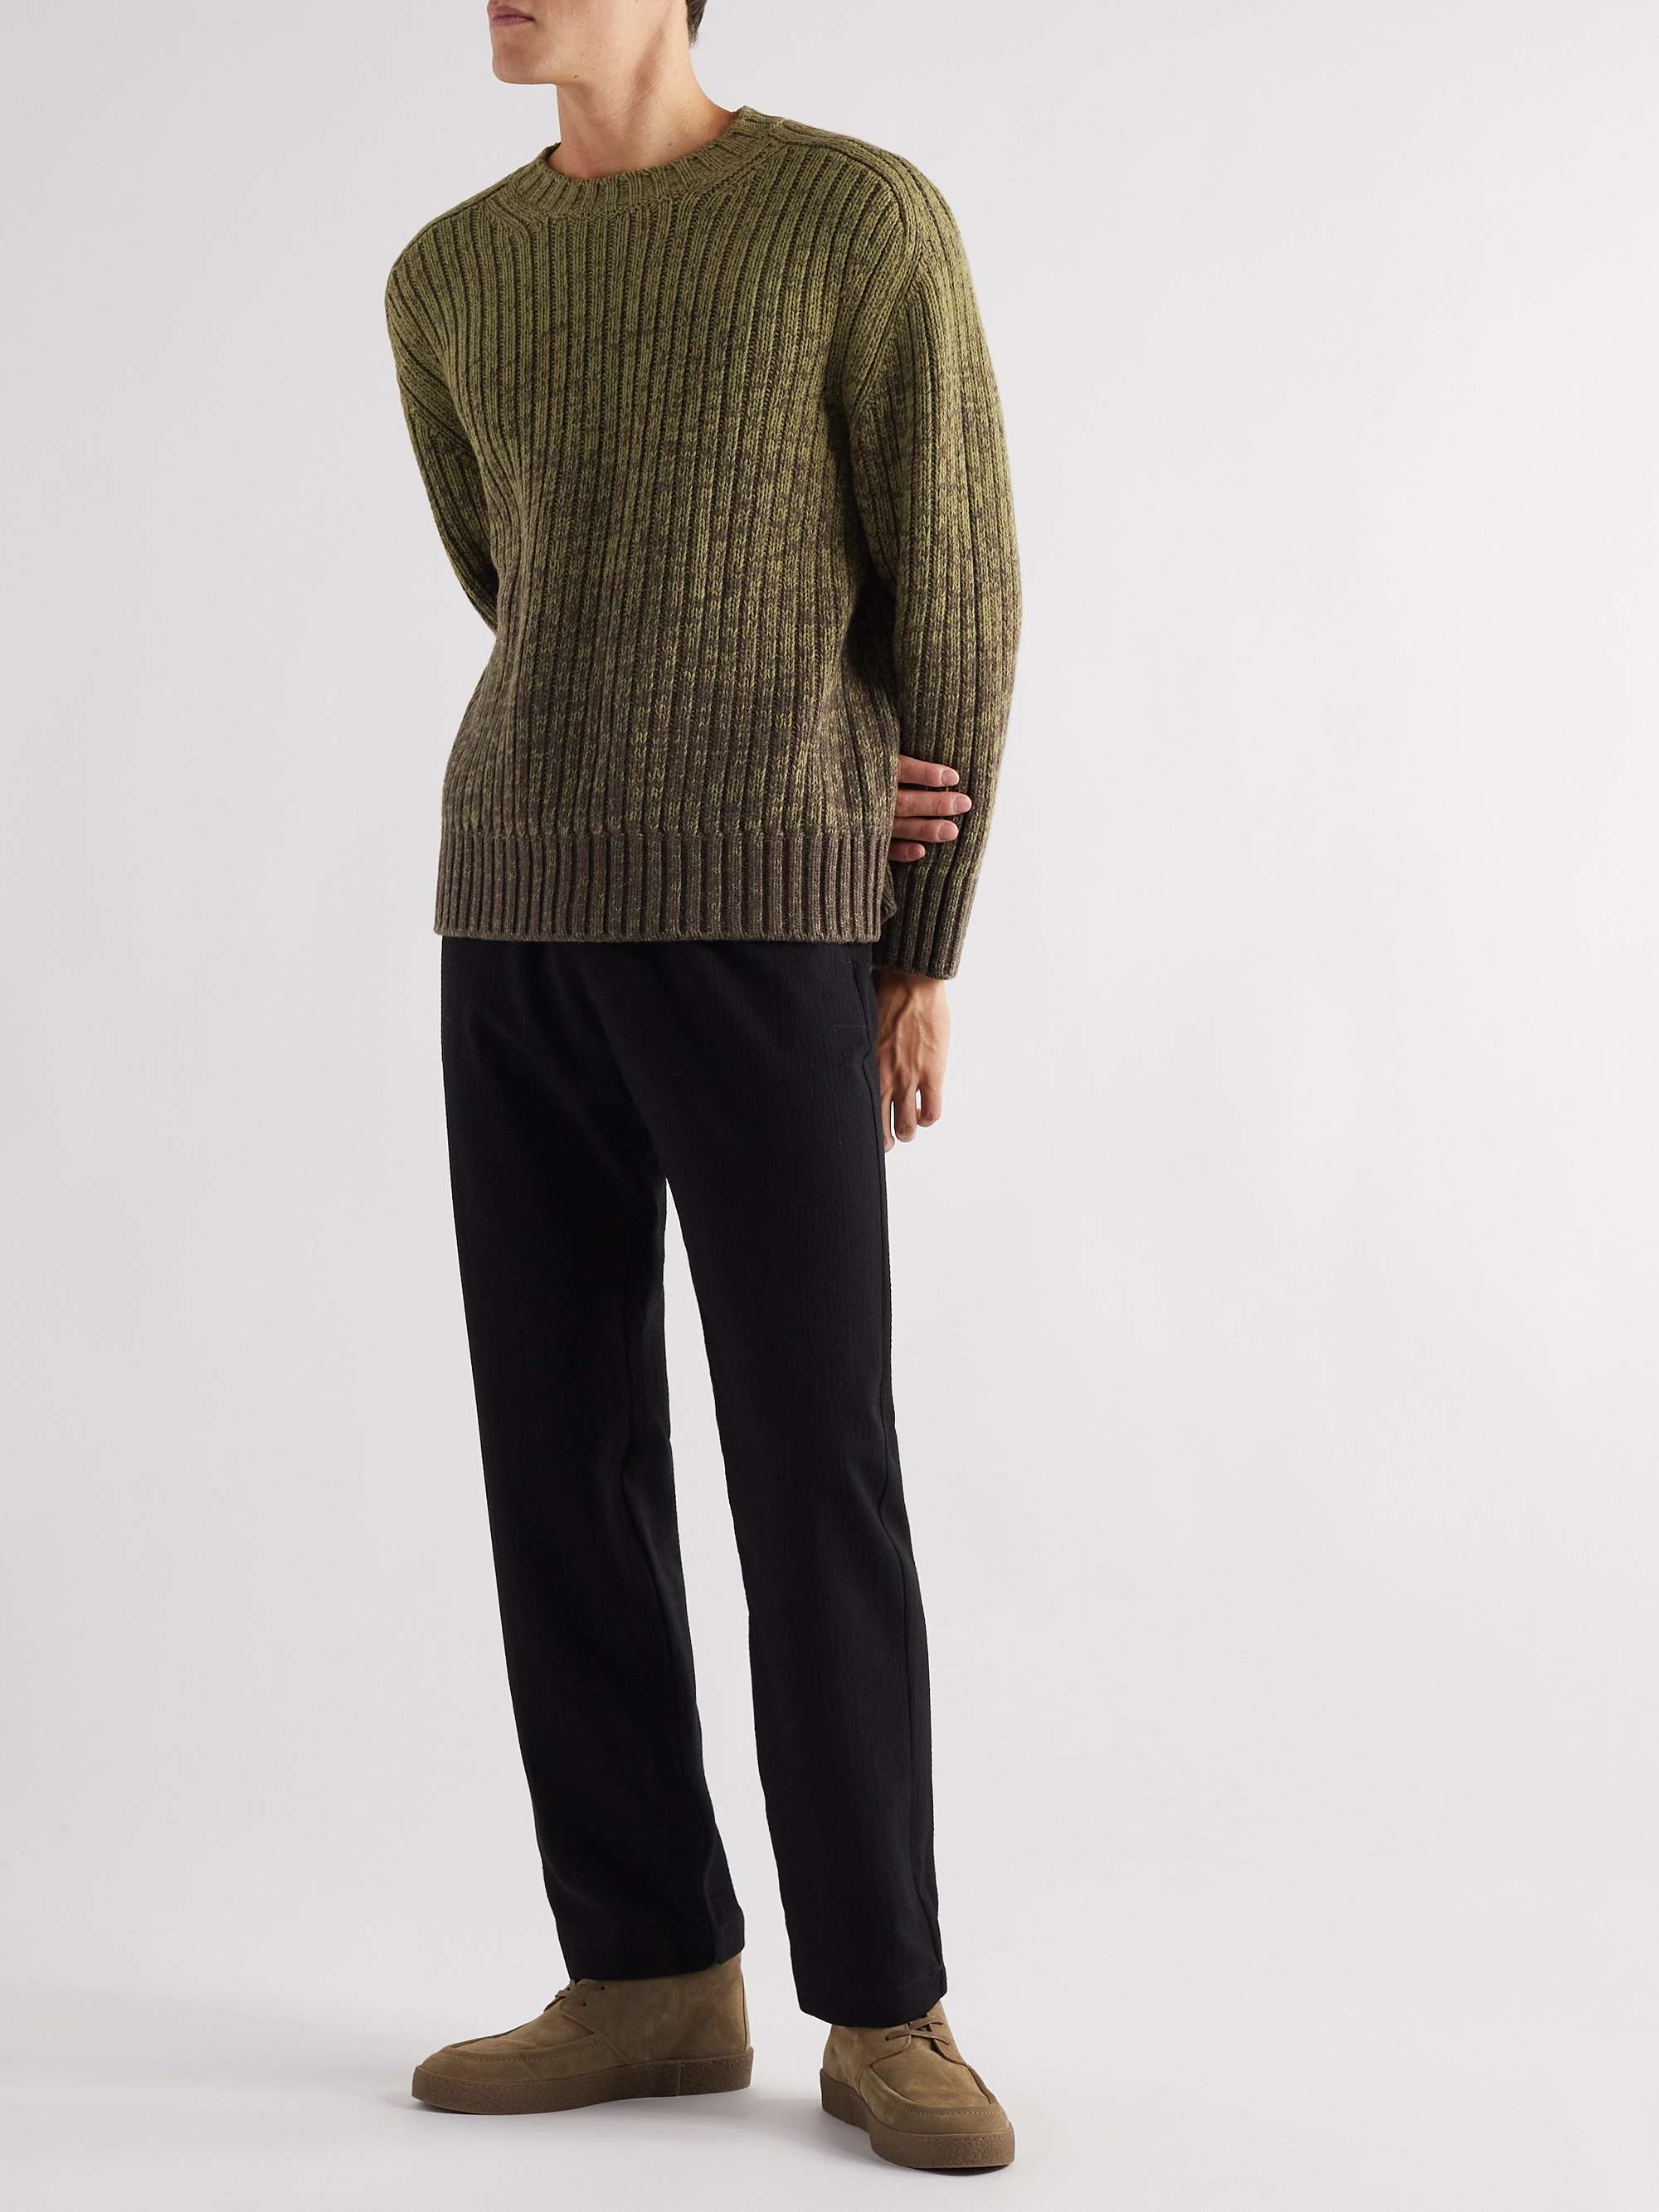 MR P. Dégradé Crocheted Cashmere and Wool-Blend Sweater